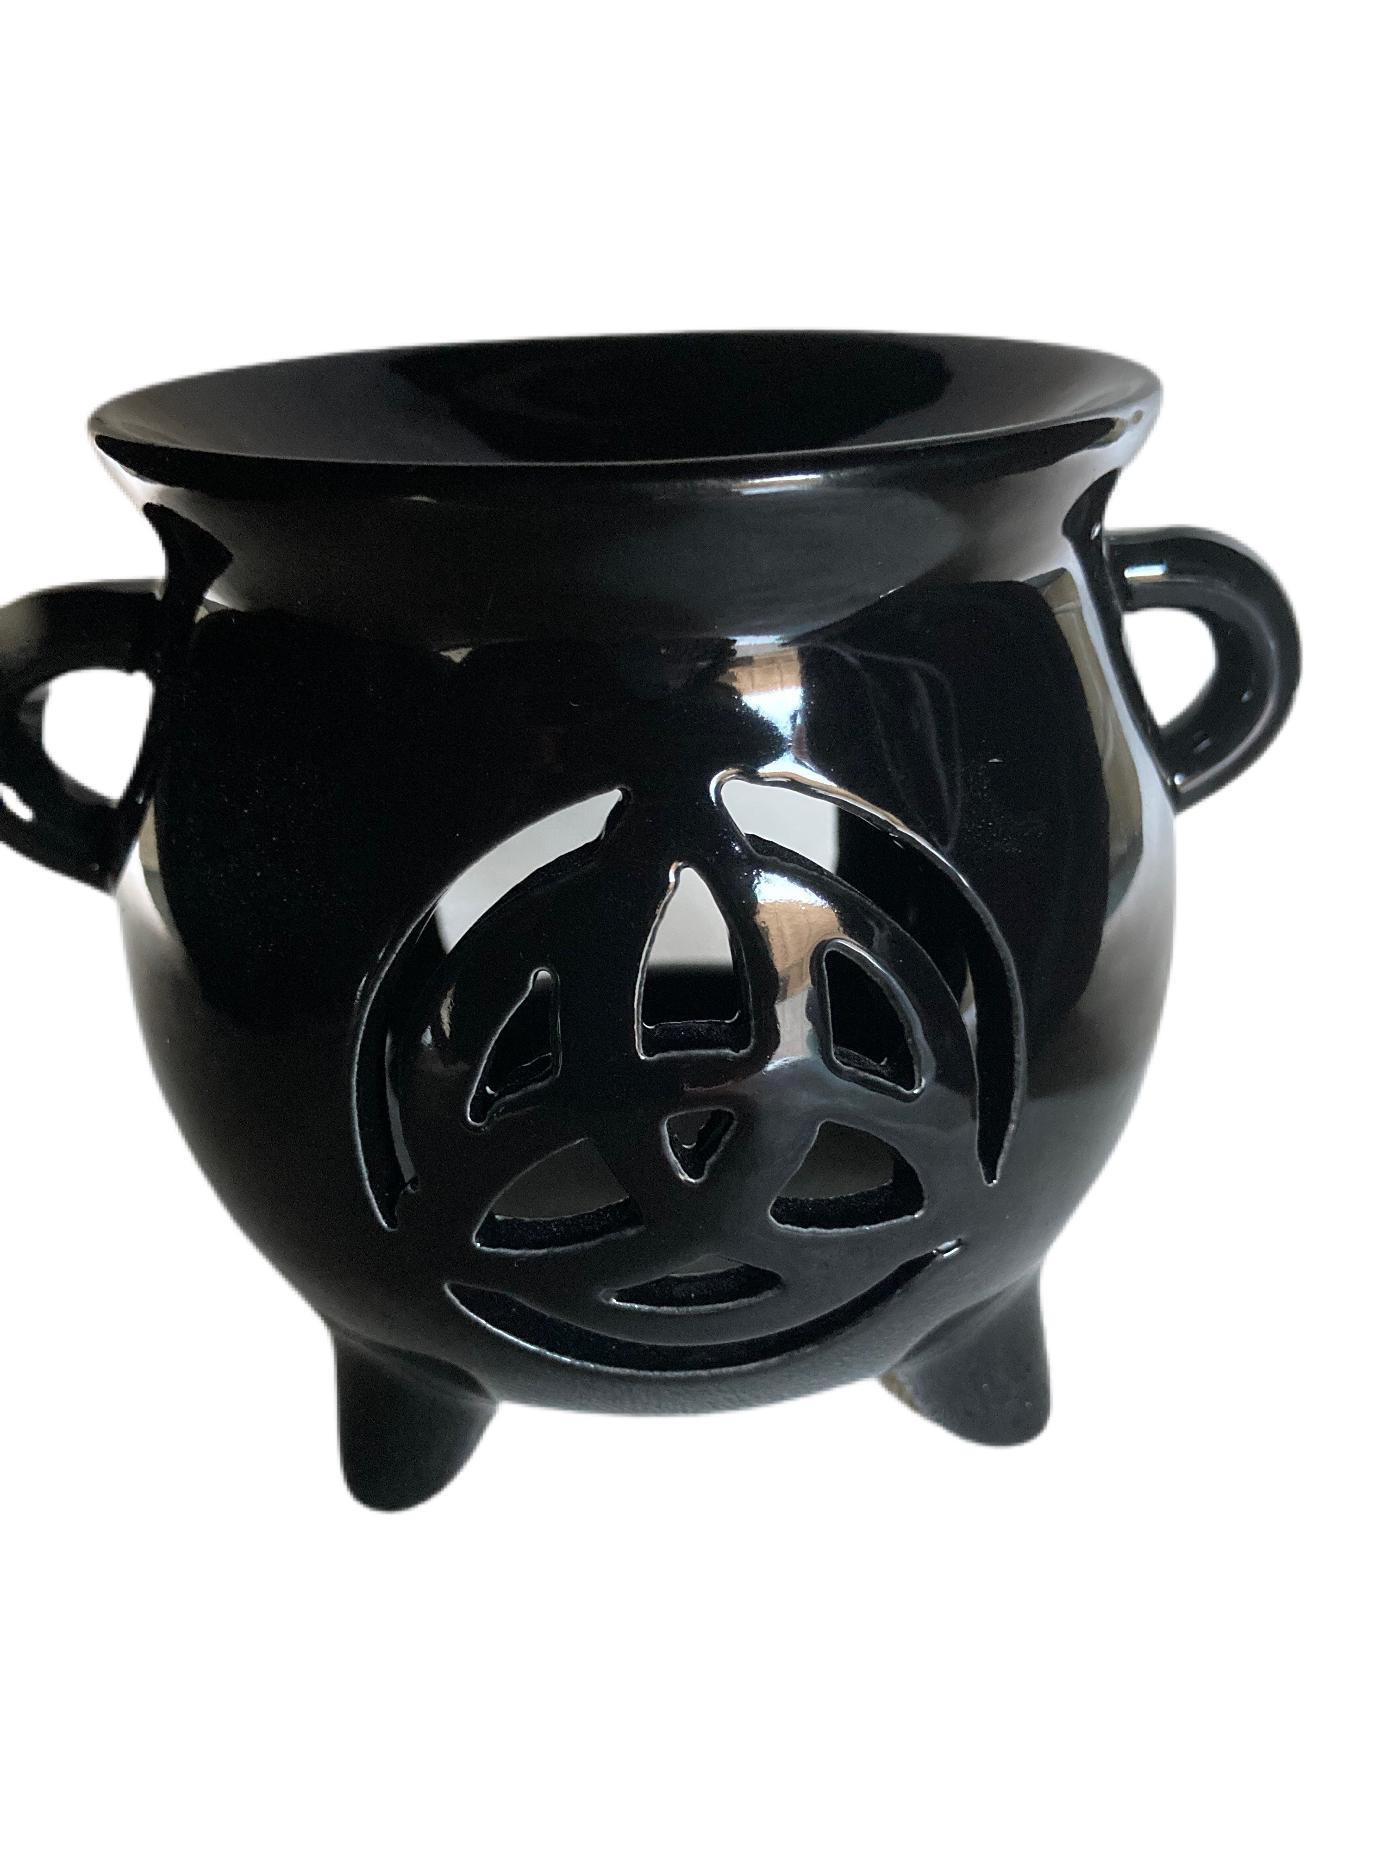 Triquetra Cauldron oil burner